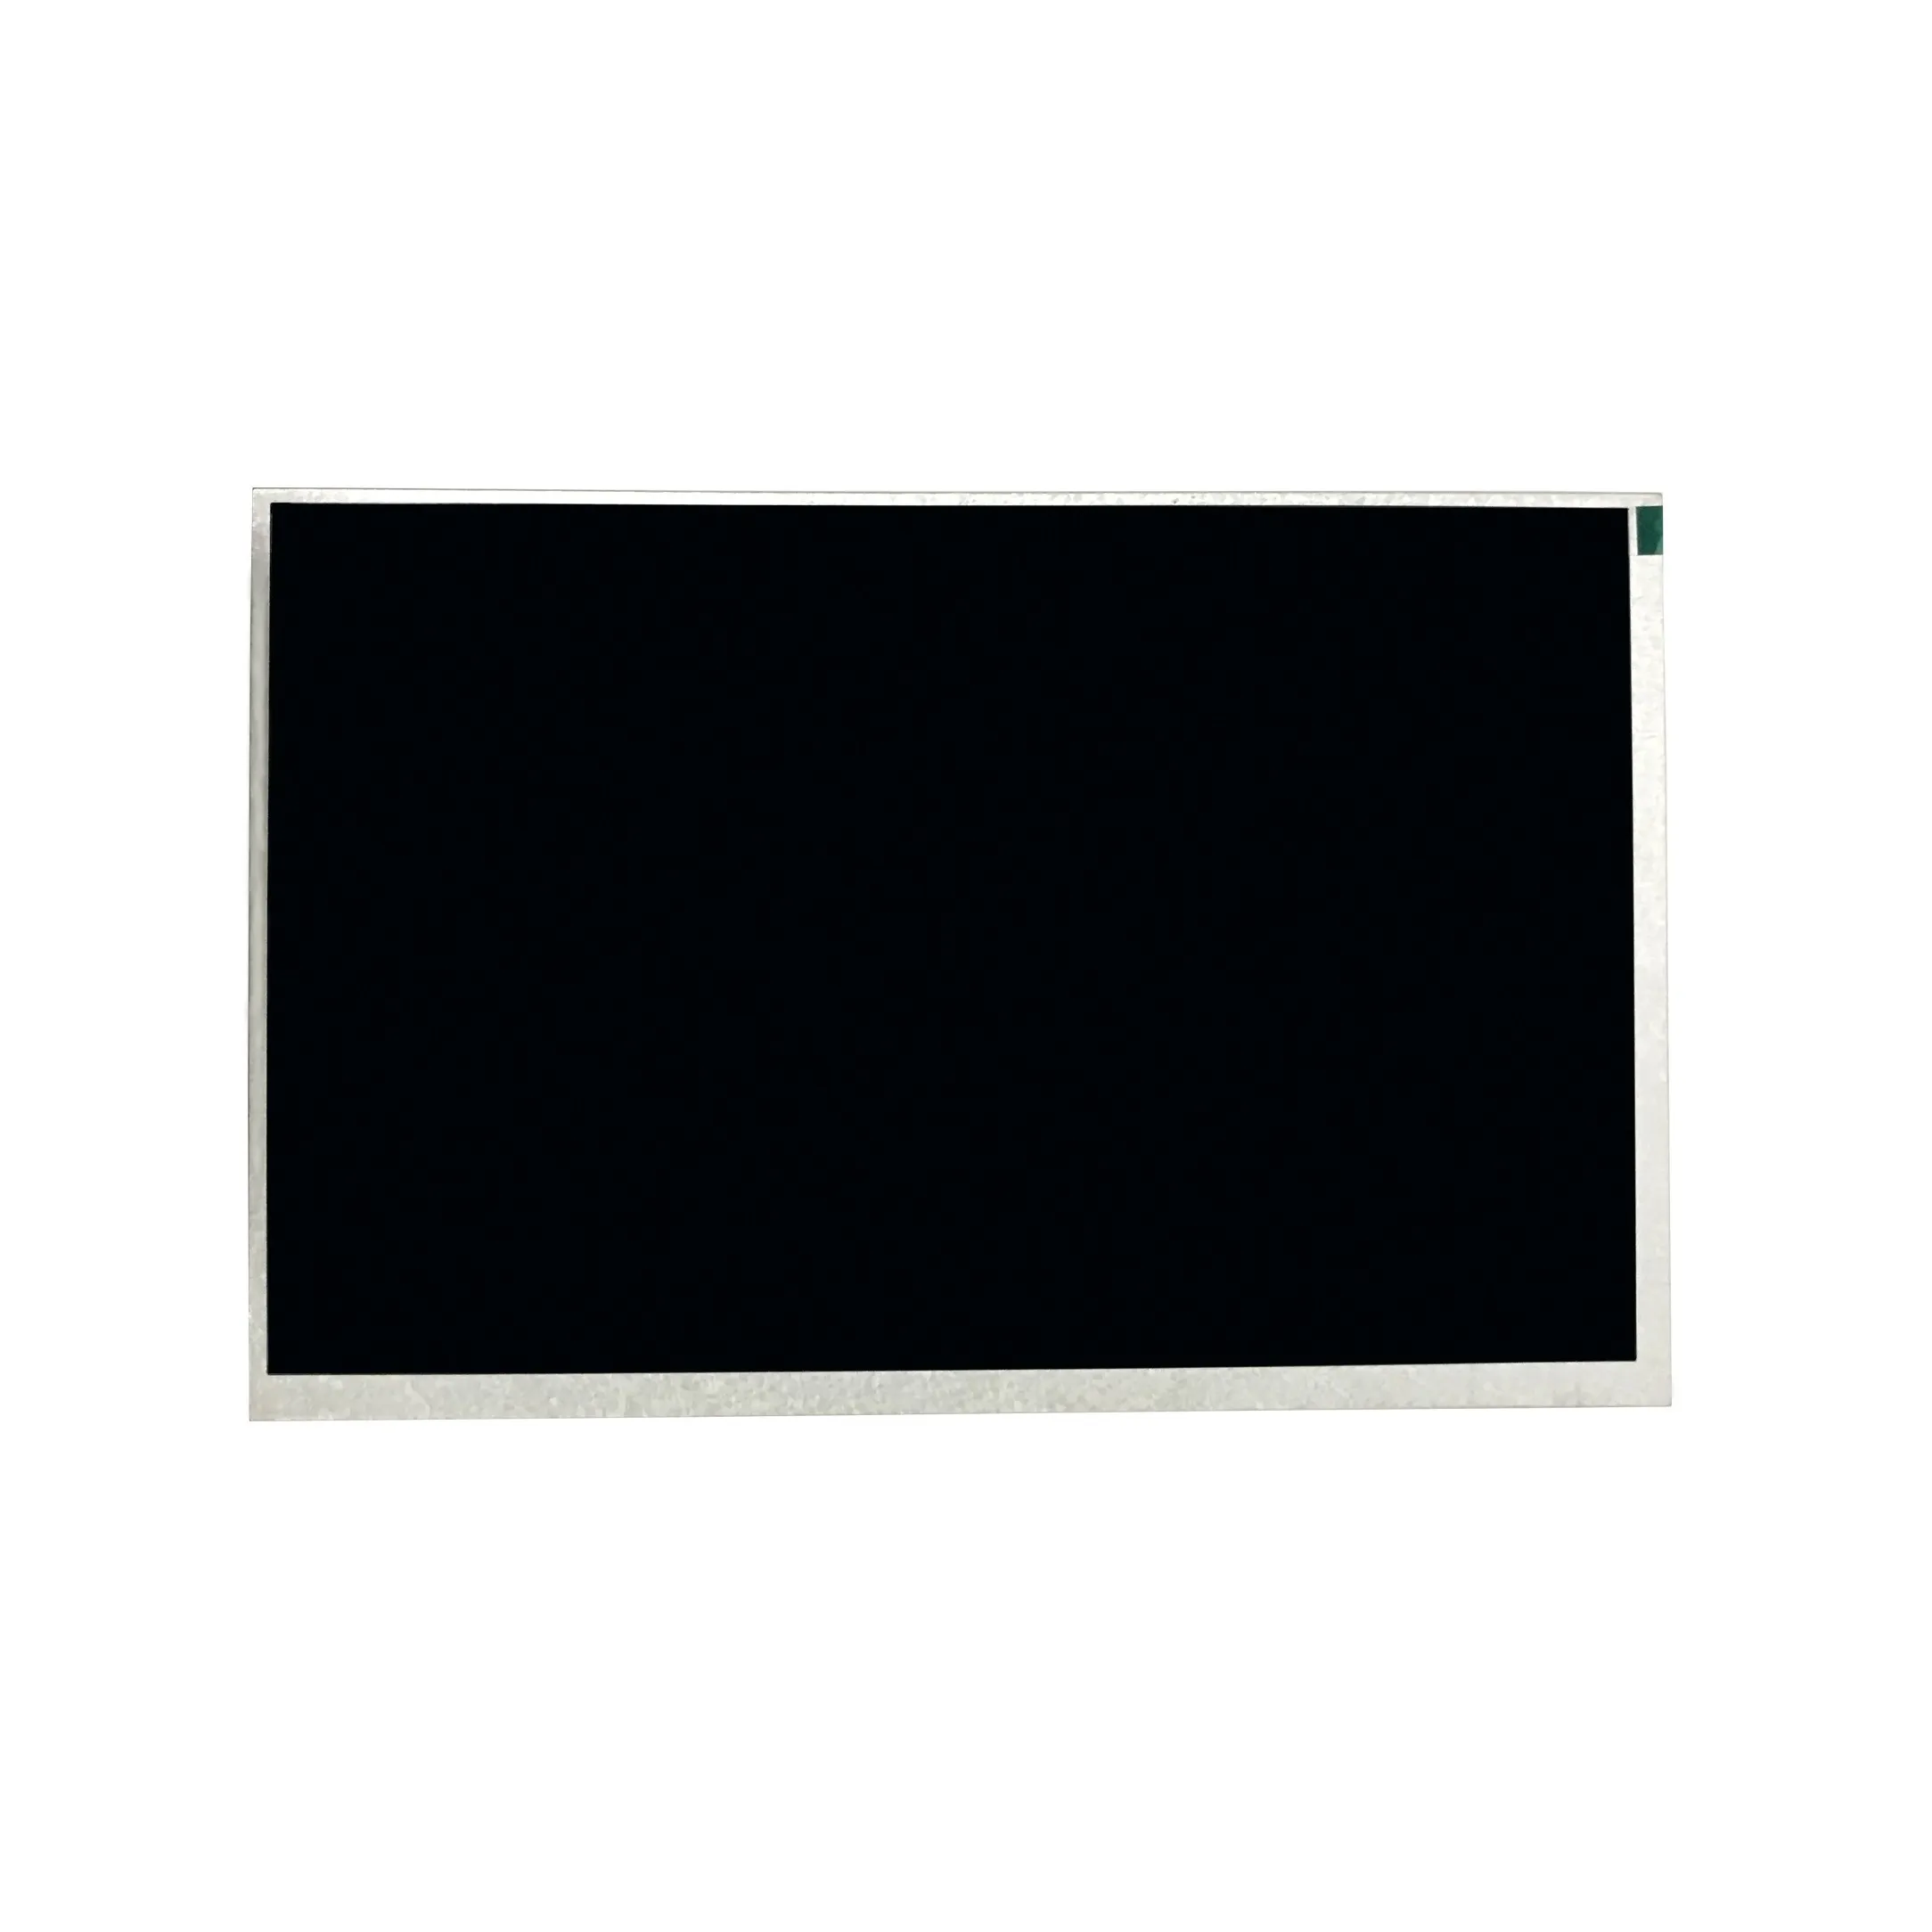 Tela LCD de toque OEM de 10,1 polegadas 1280*800 40 pinos LVDs para exterior 1200 nit tft